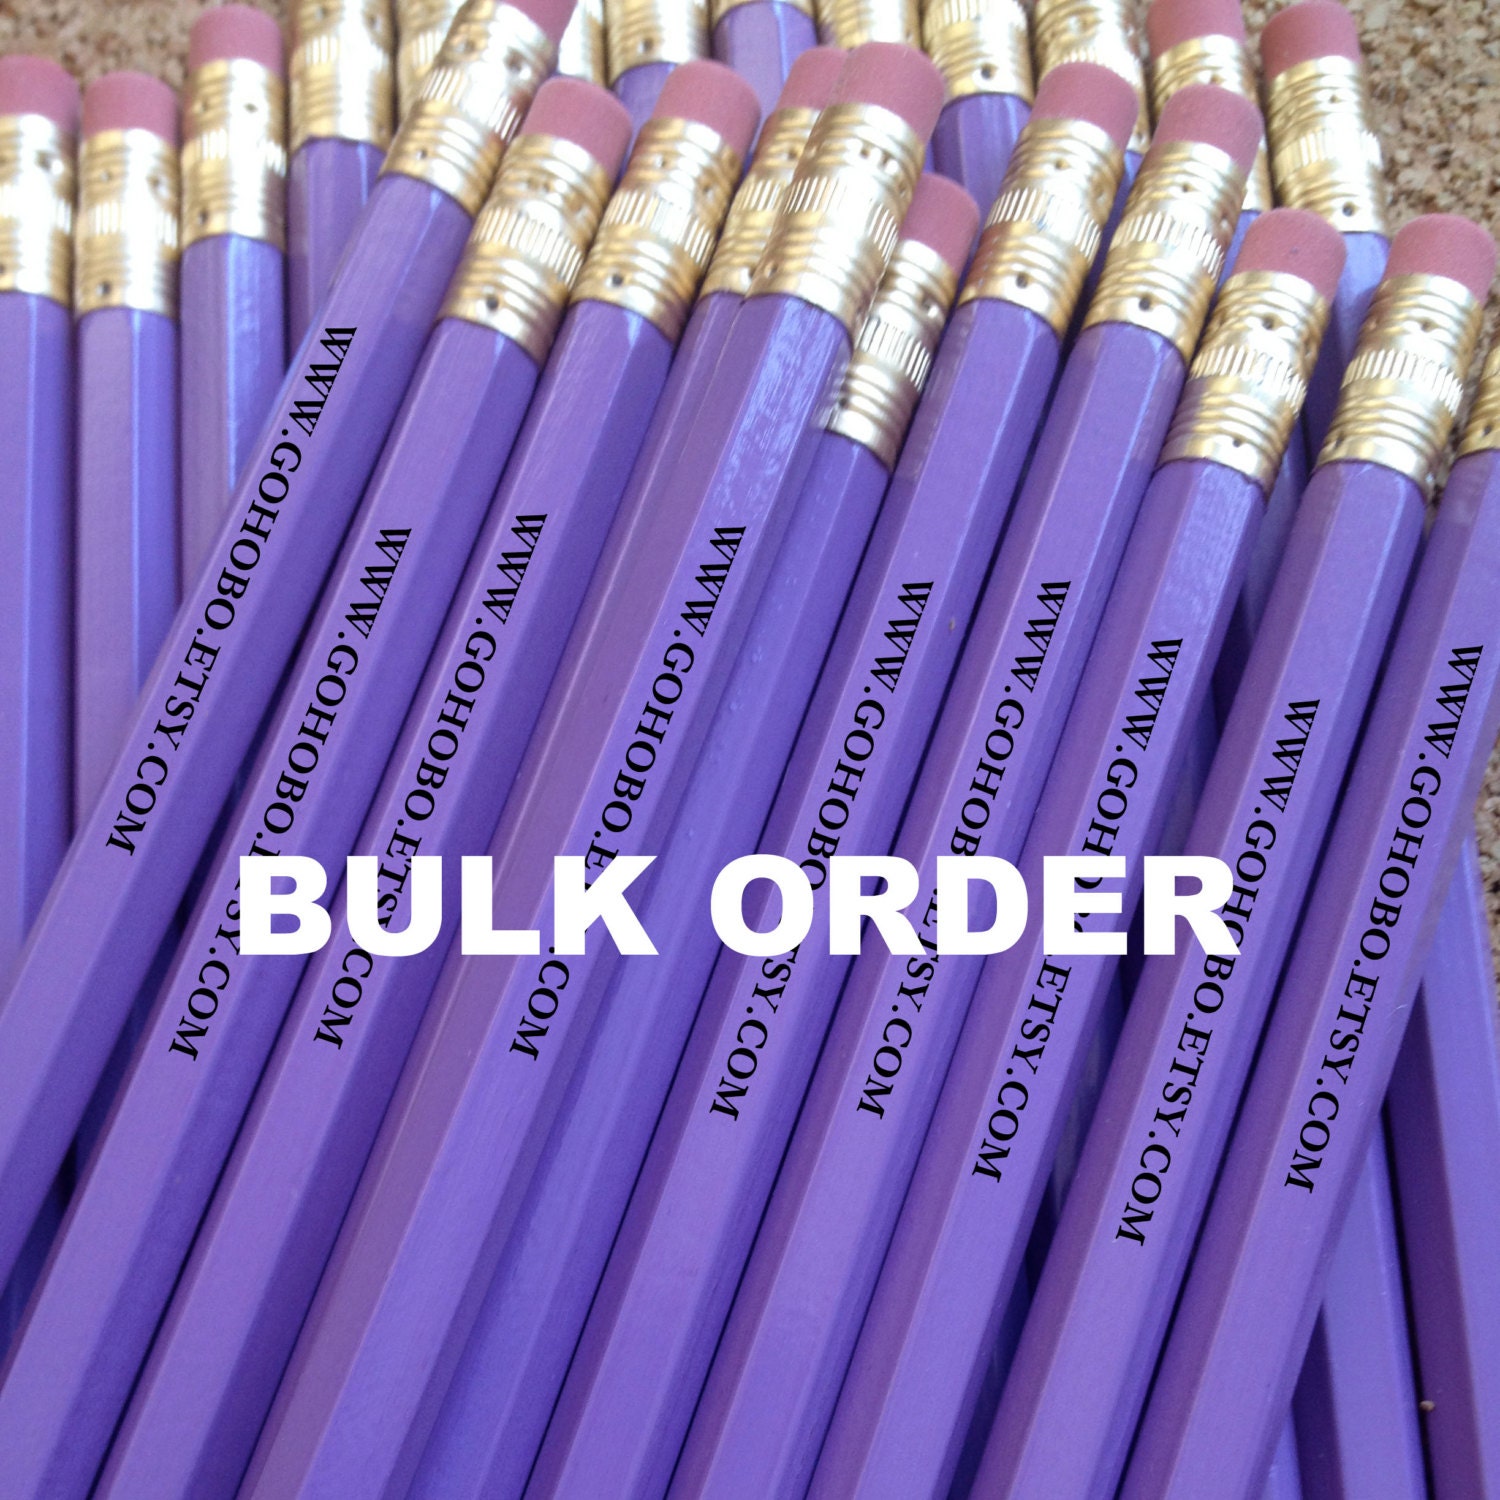 50 PENCILS Bulk Order Set of 50 Personalized Pencils Choose Your